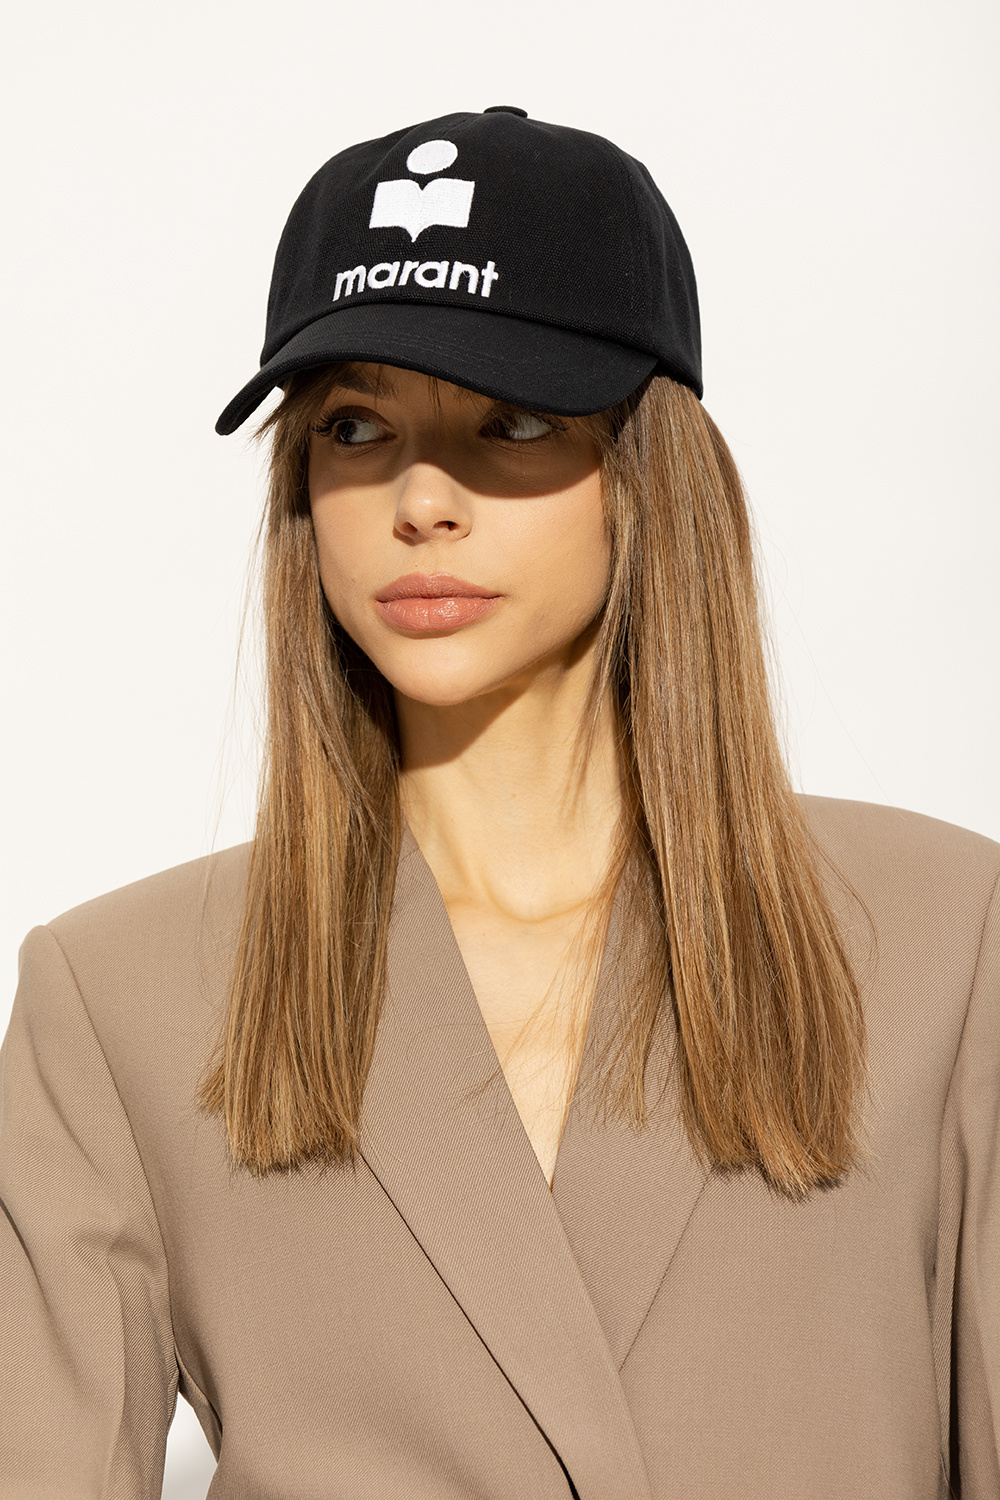 SchaferandweinerShops Spain - Melania Trump wearing a white hat in Kenya -  Black 'Tyron' baseball cap Isabel Marant